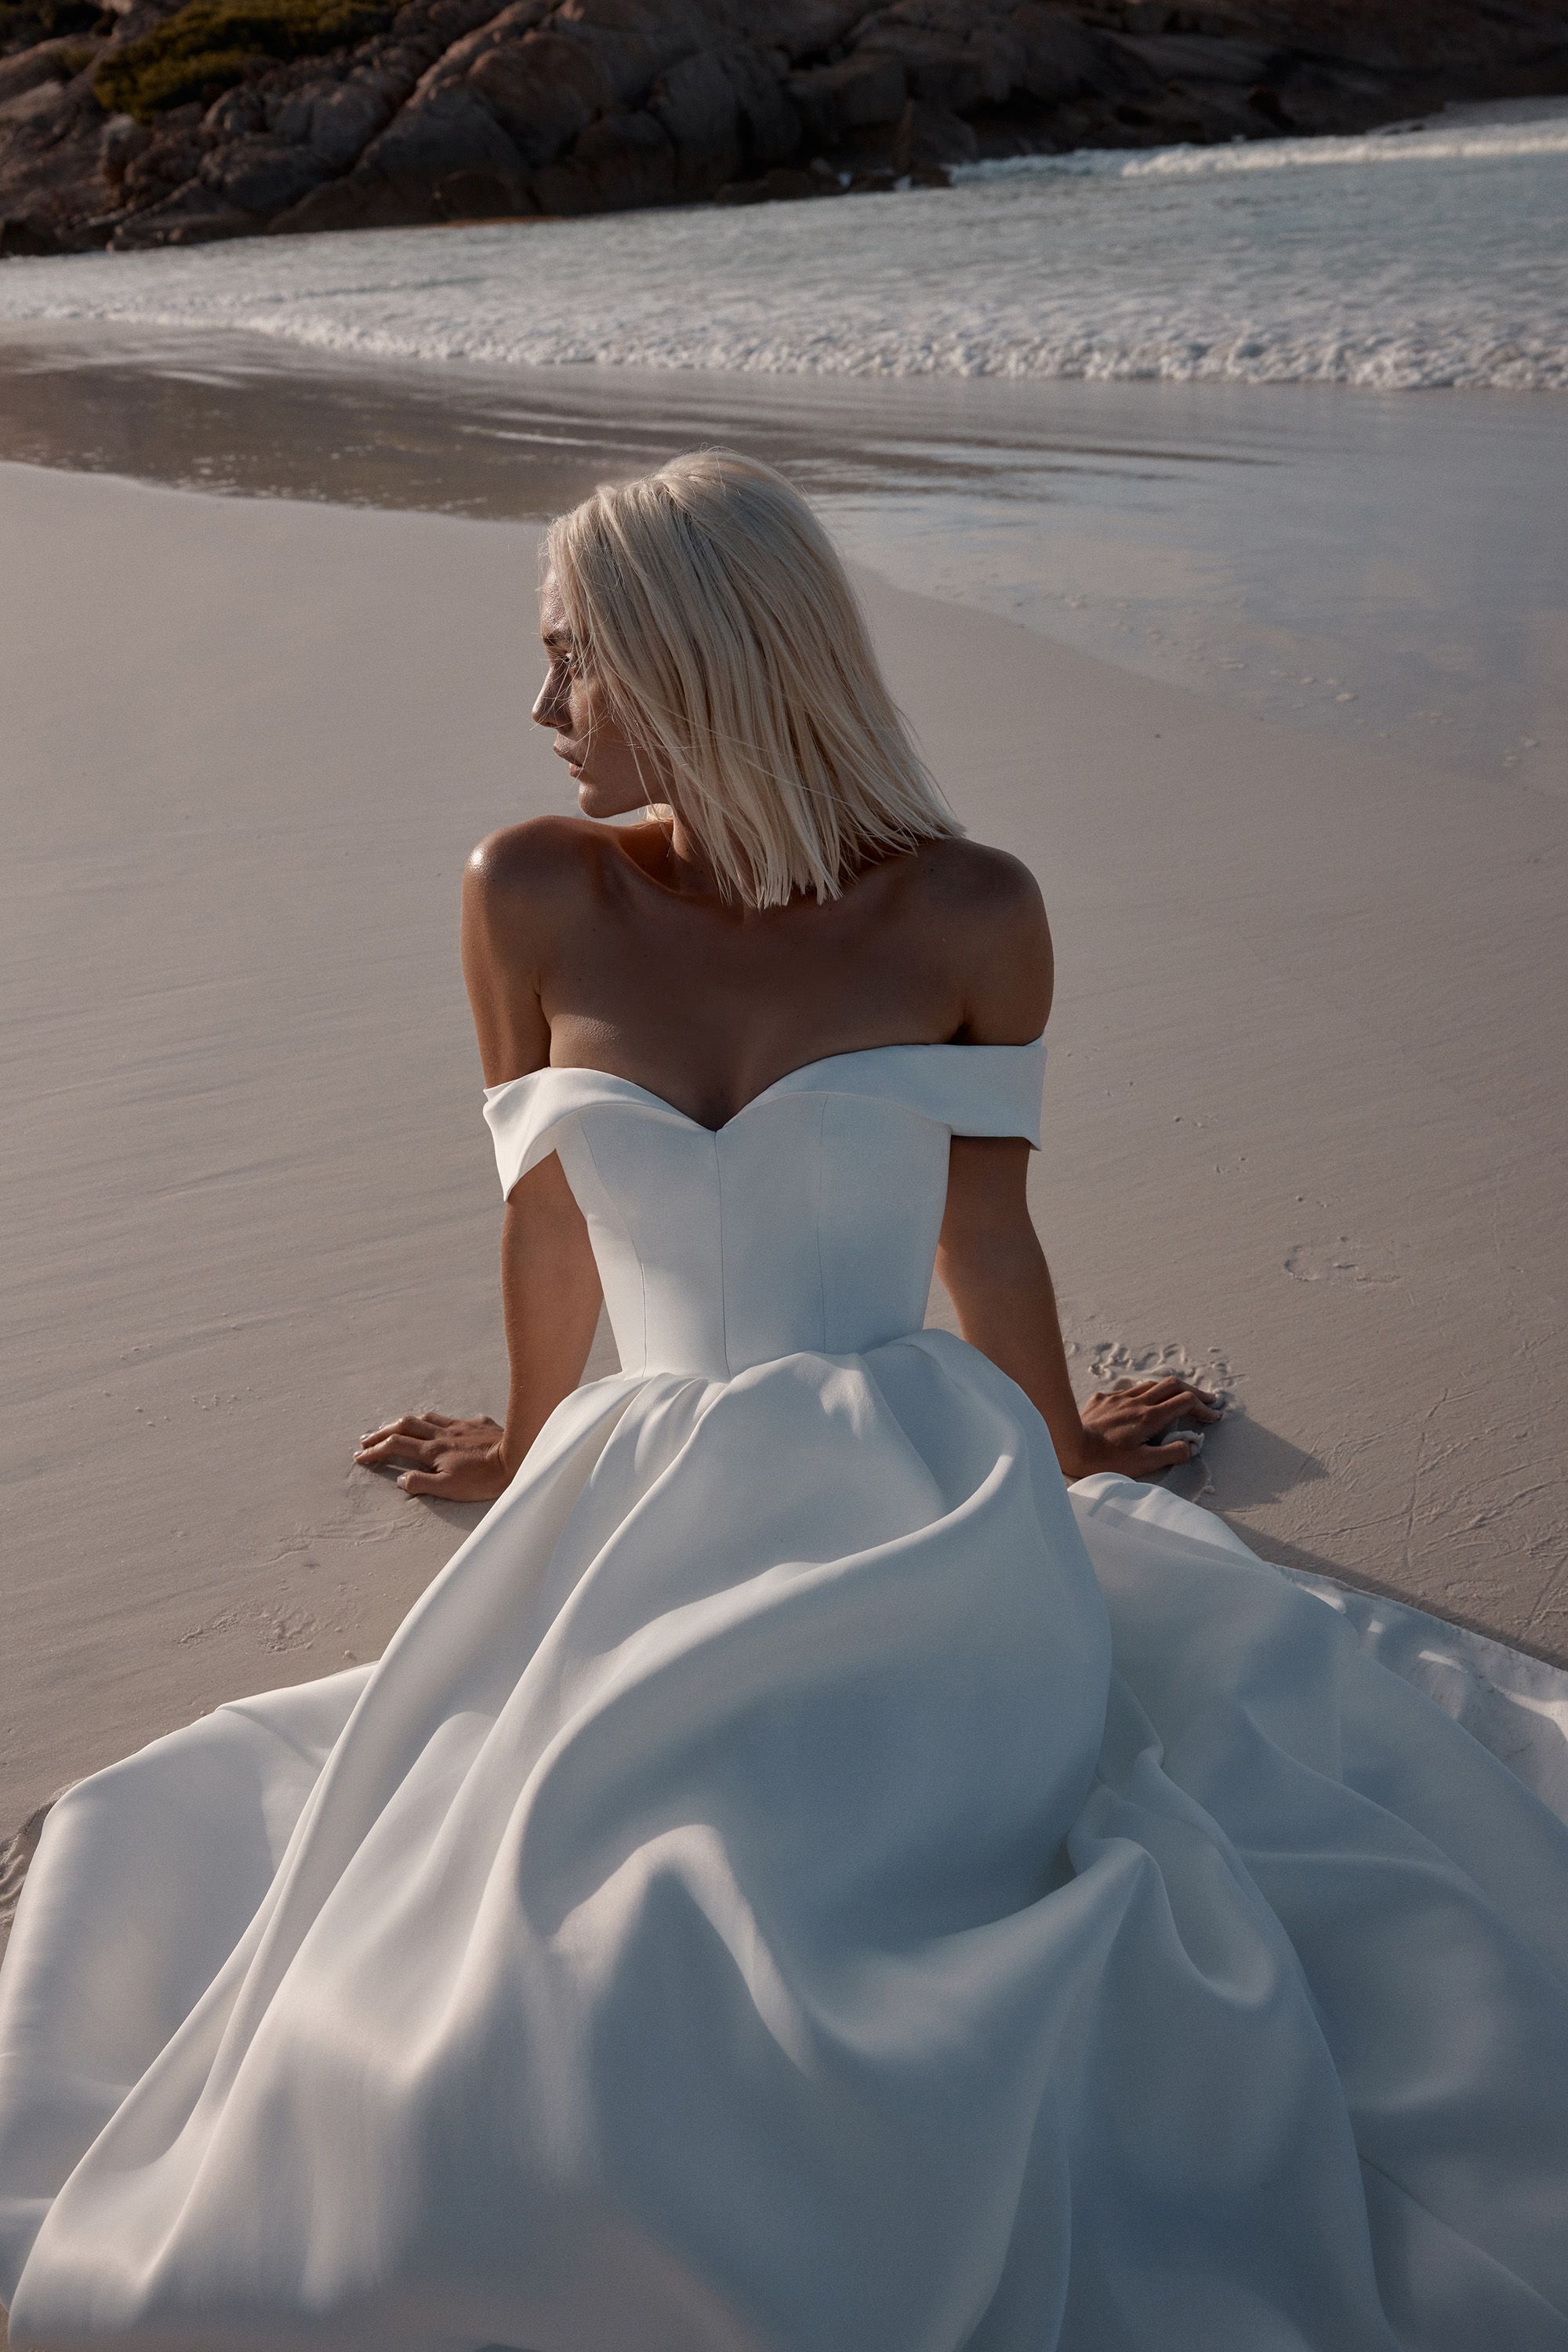 white wedding dress alter ego collection